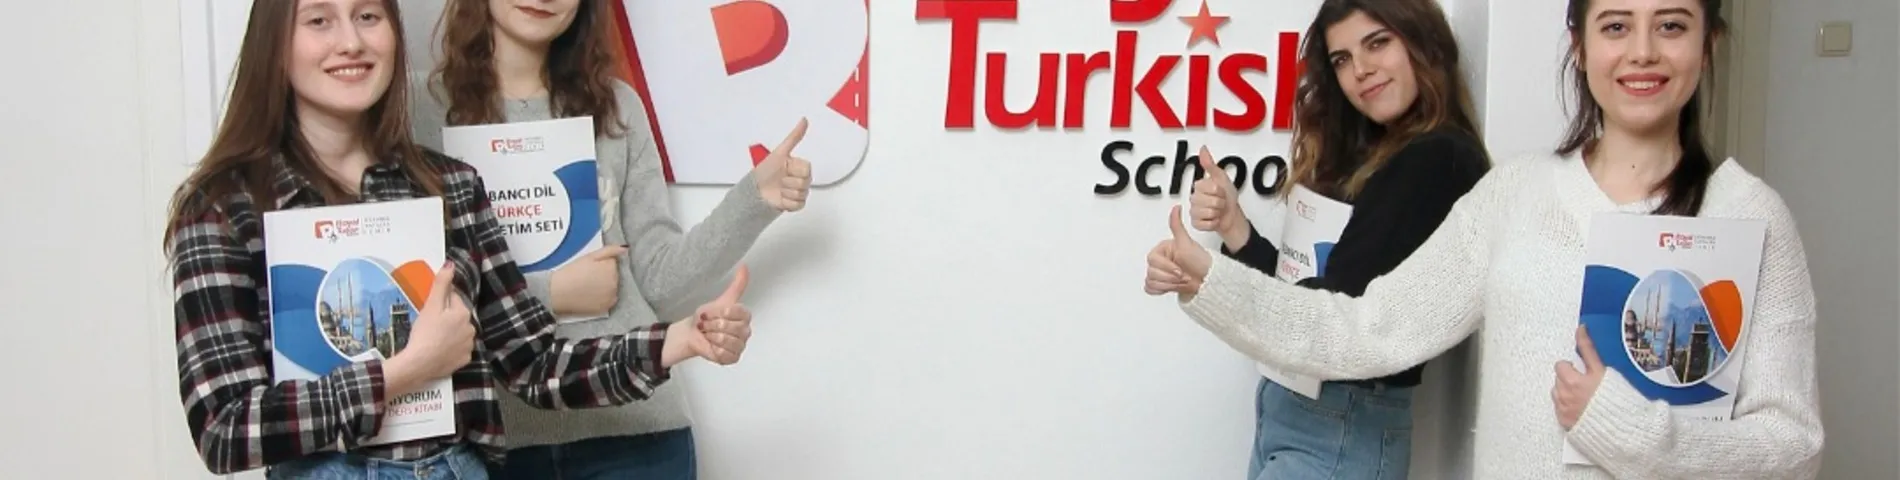 Royal Turkish Education Center photo 1